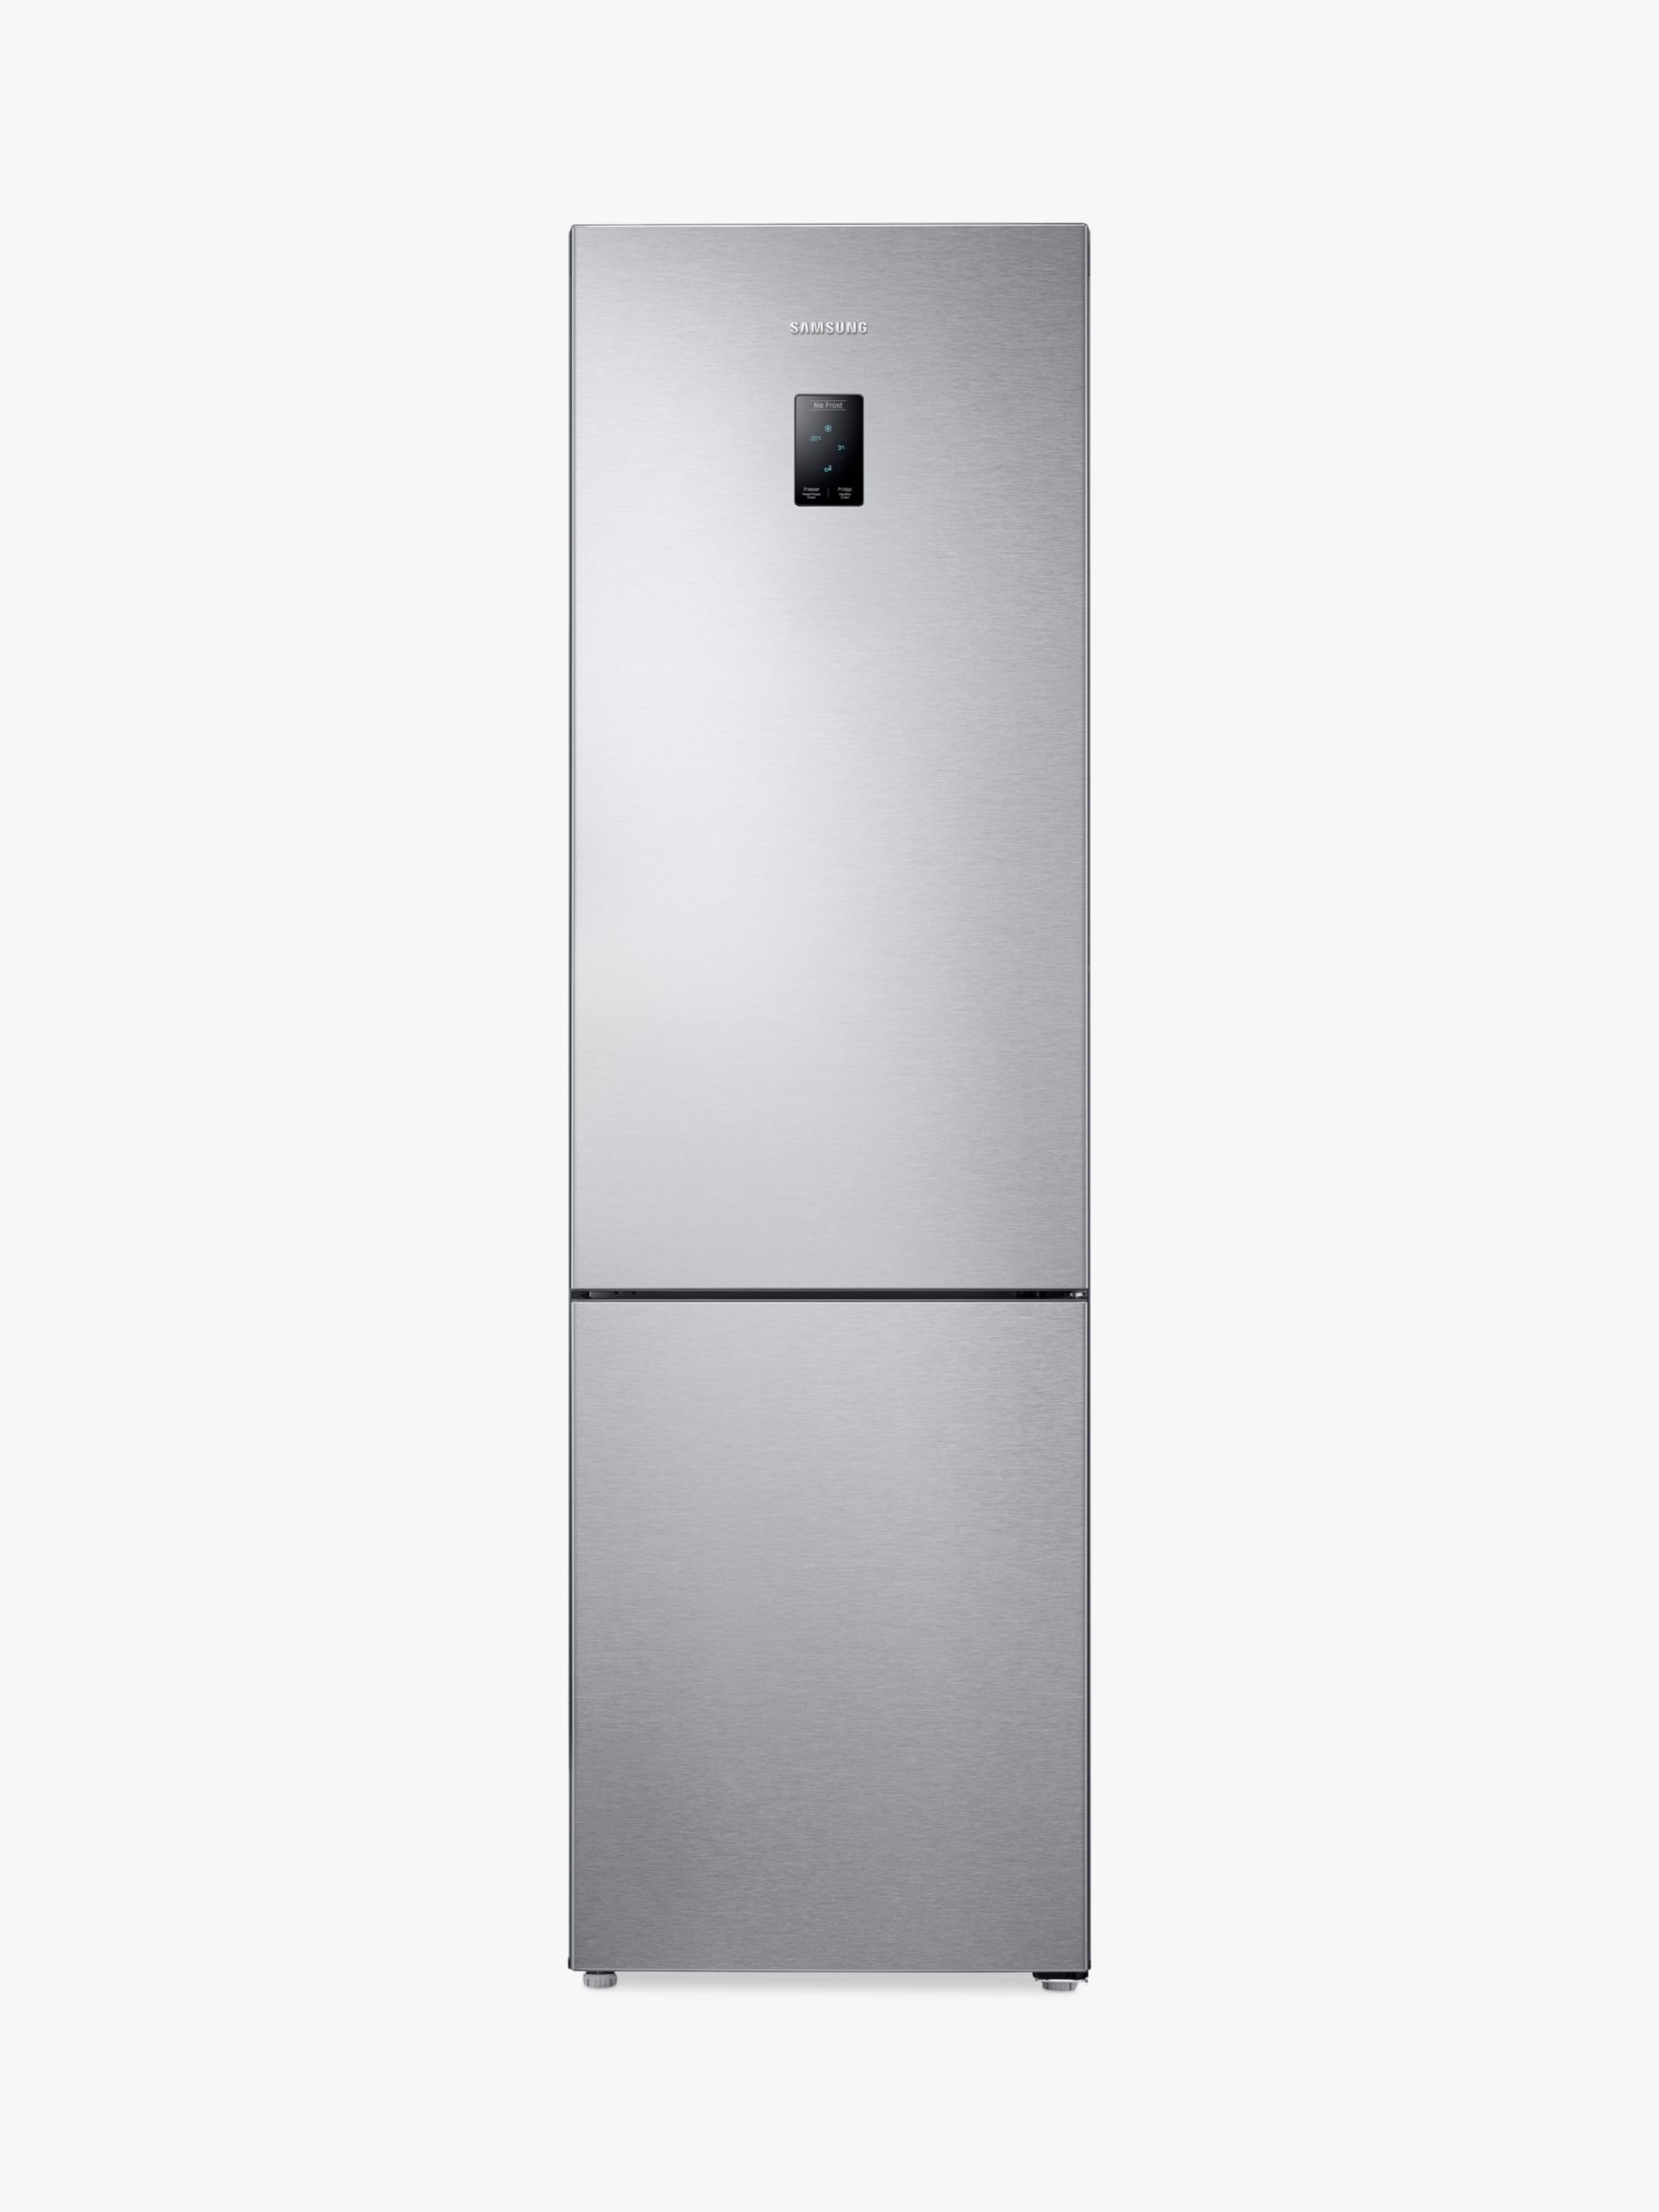 Samsung RB37J5230SL Freestanding Fridge-Freezer, A+ Energy Rating, 60cm Wide, Stainless Steel